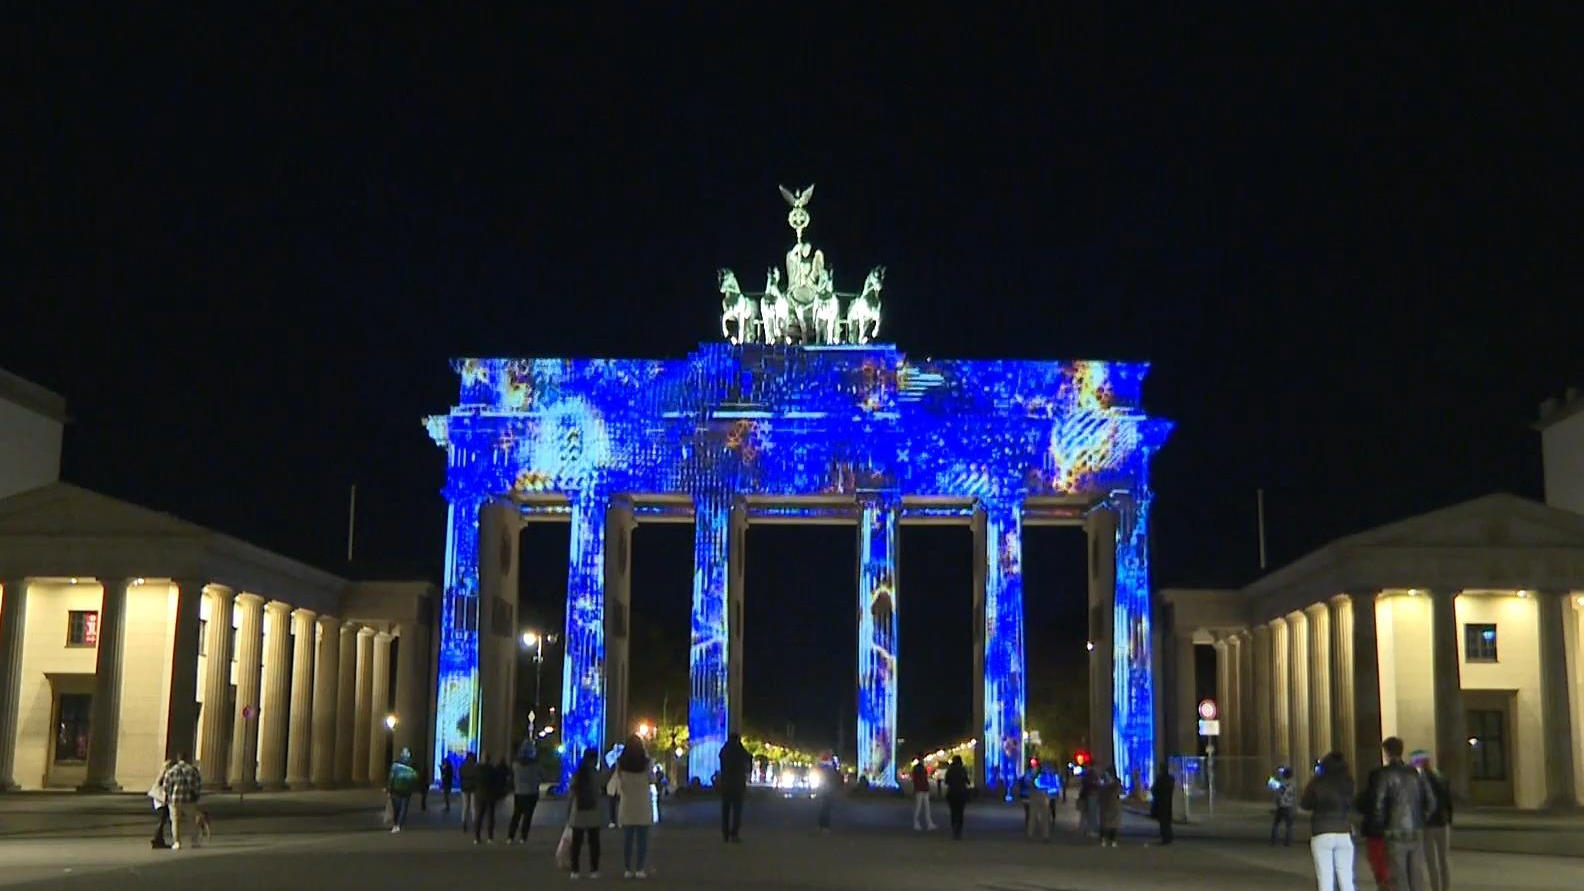 Riesen-Light-Show in Berlin - trotz Krise?! EU-Chefs beraten über Krise